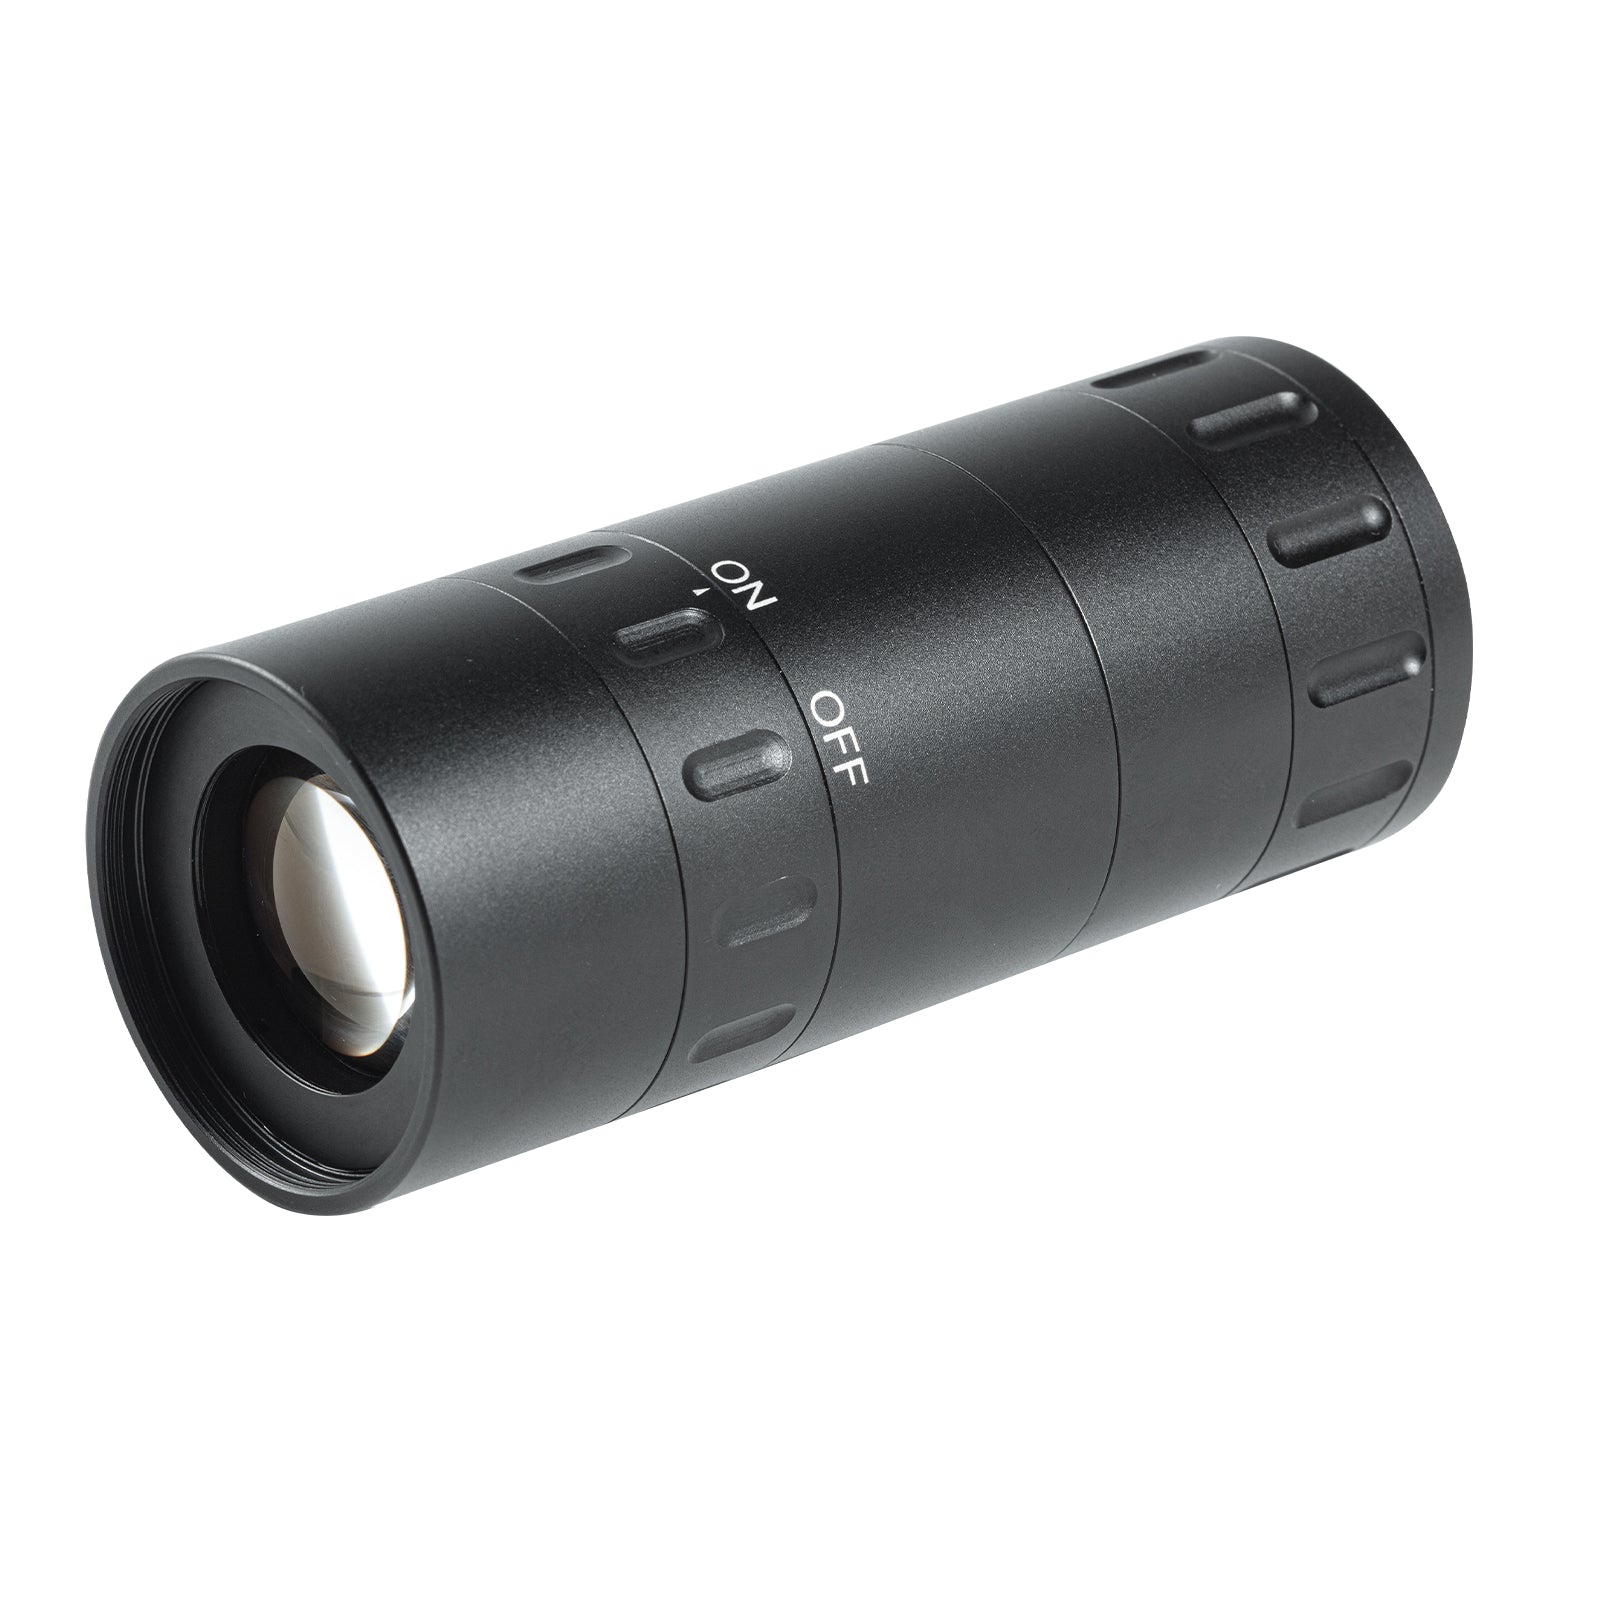 Eyeskey GL521 Handheld Low-light-level Night Vision Monocular